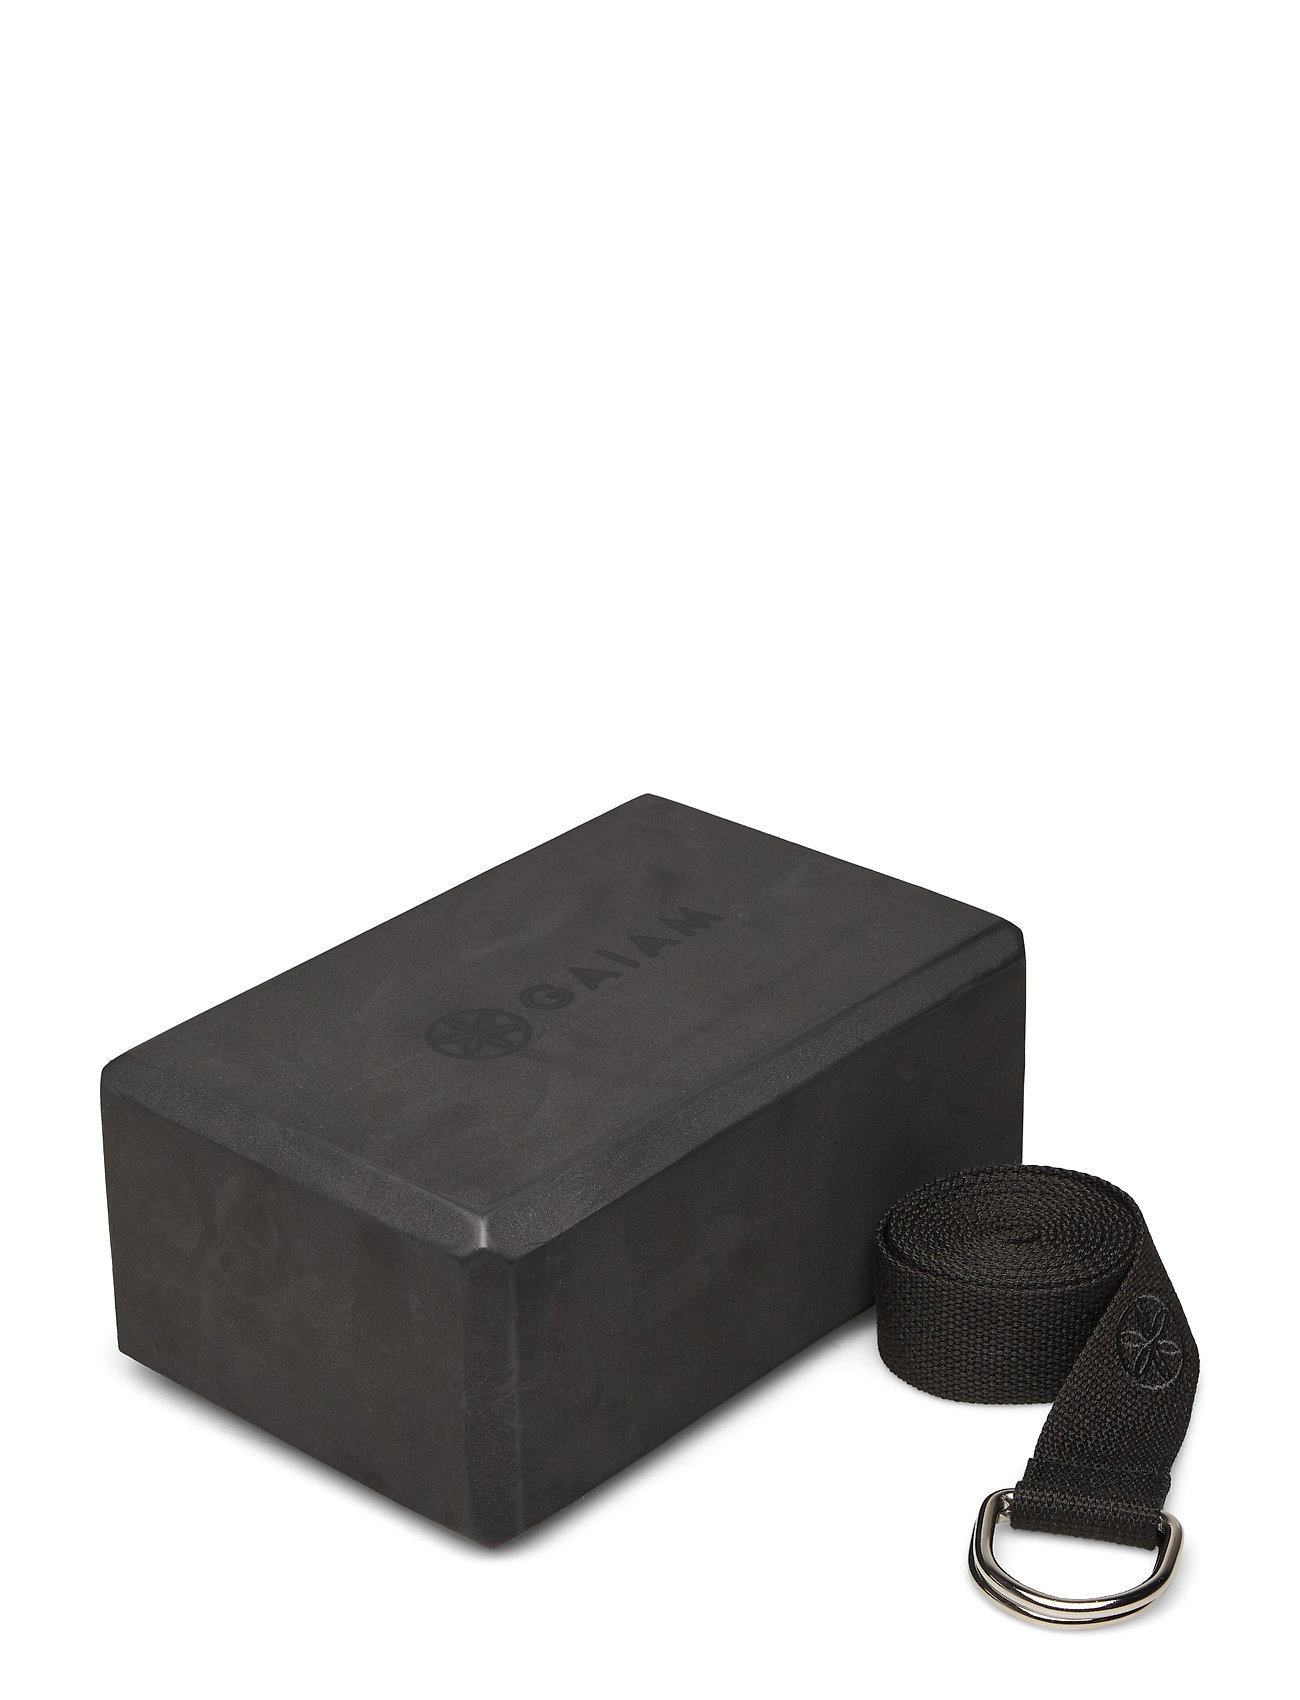 Gaiam Block-Strap Combo Black Accessories Sports Equipment Yoga Equipment Yoga Blocks And Straps Musta Gaiam